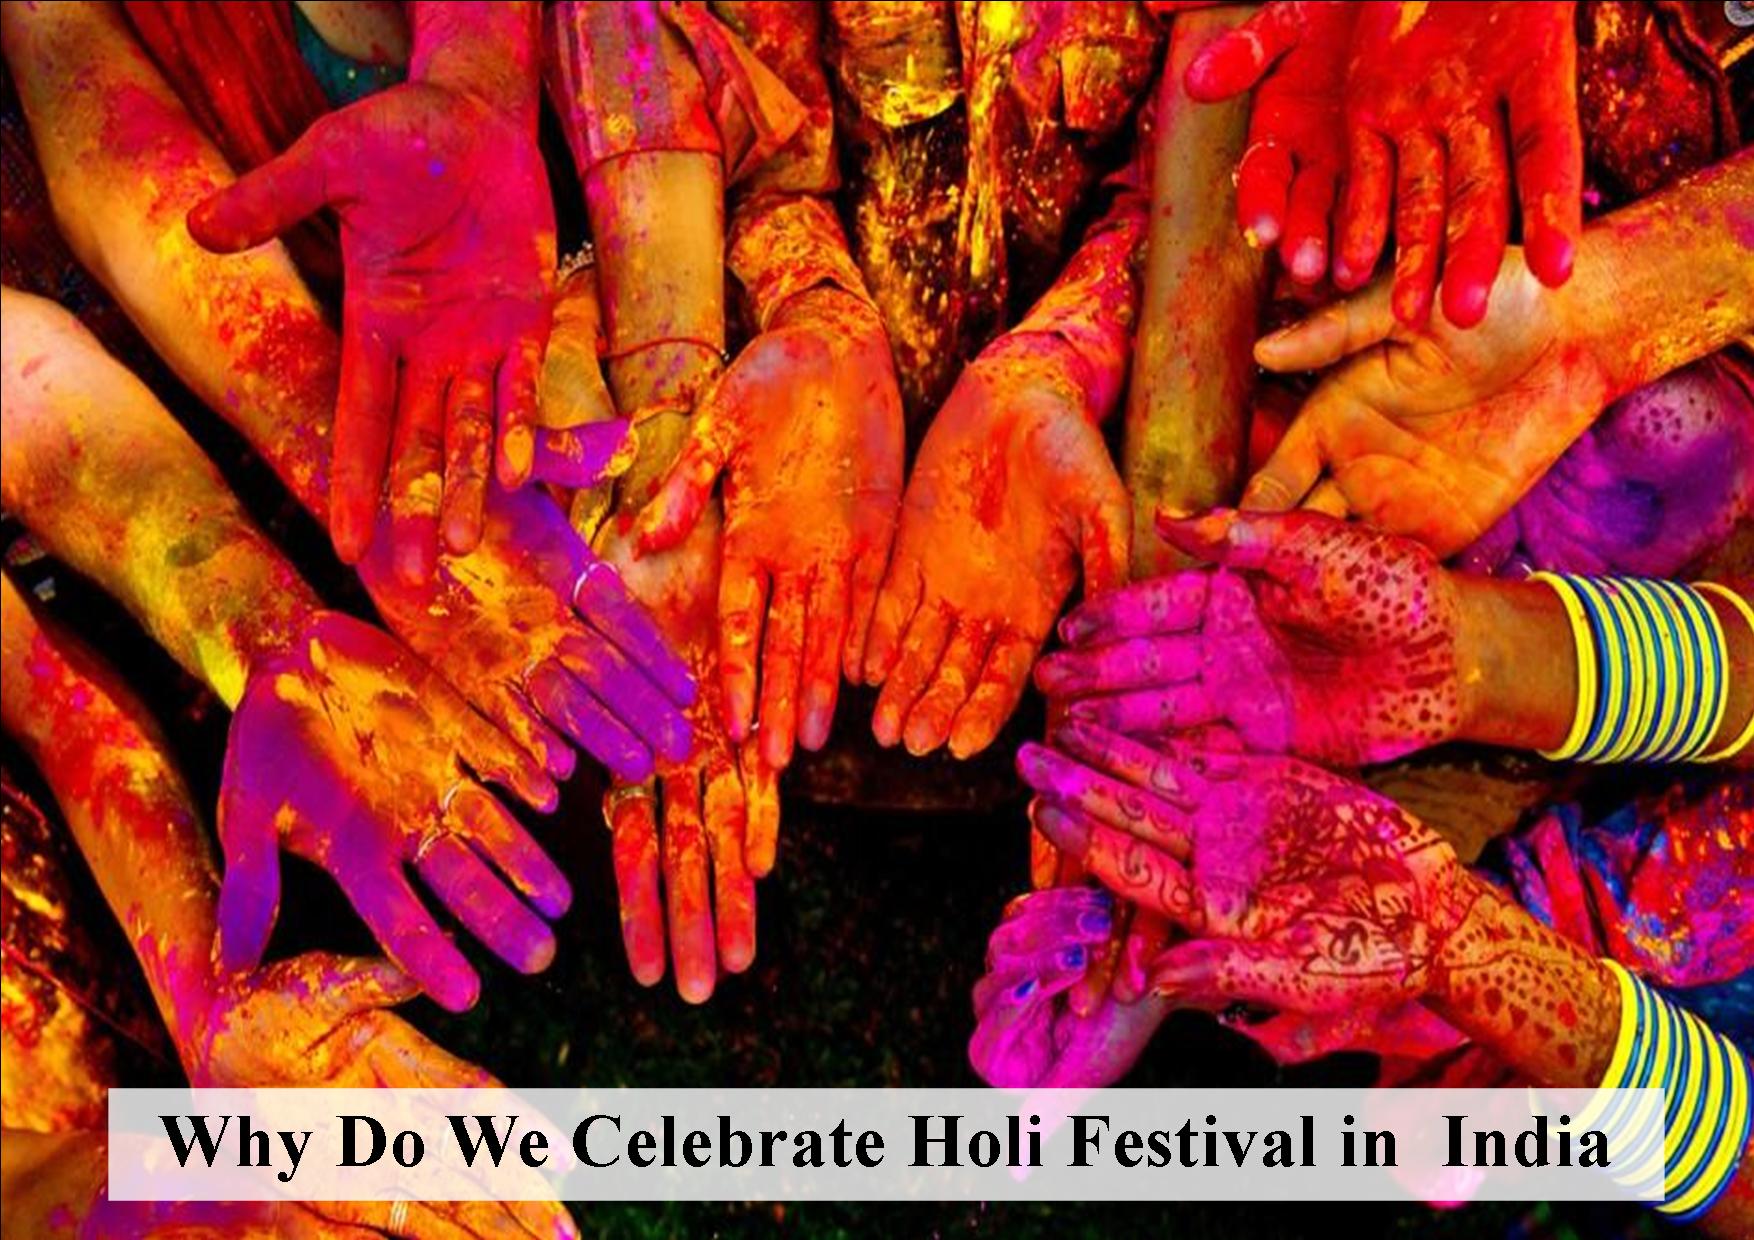 Why Holi is celebrated?